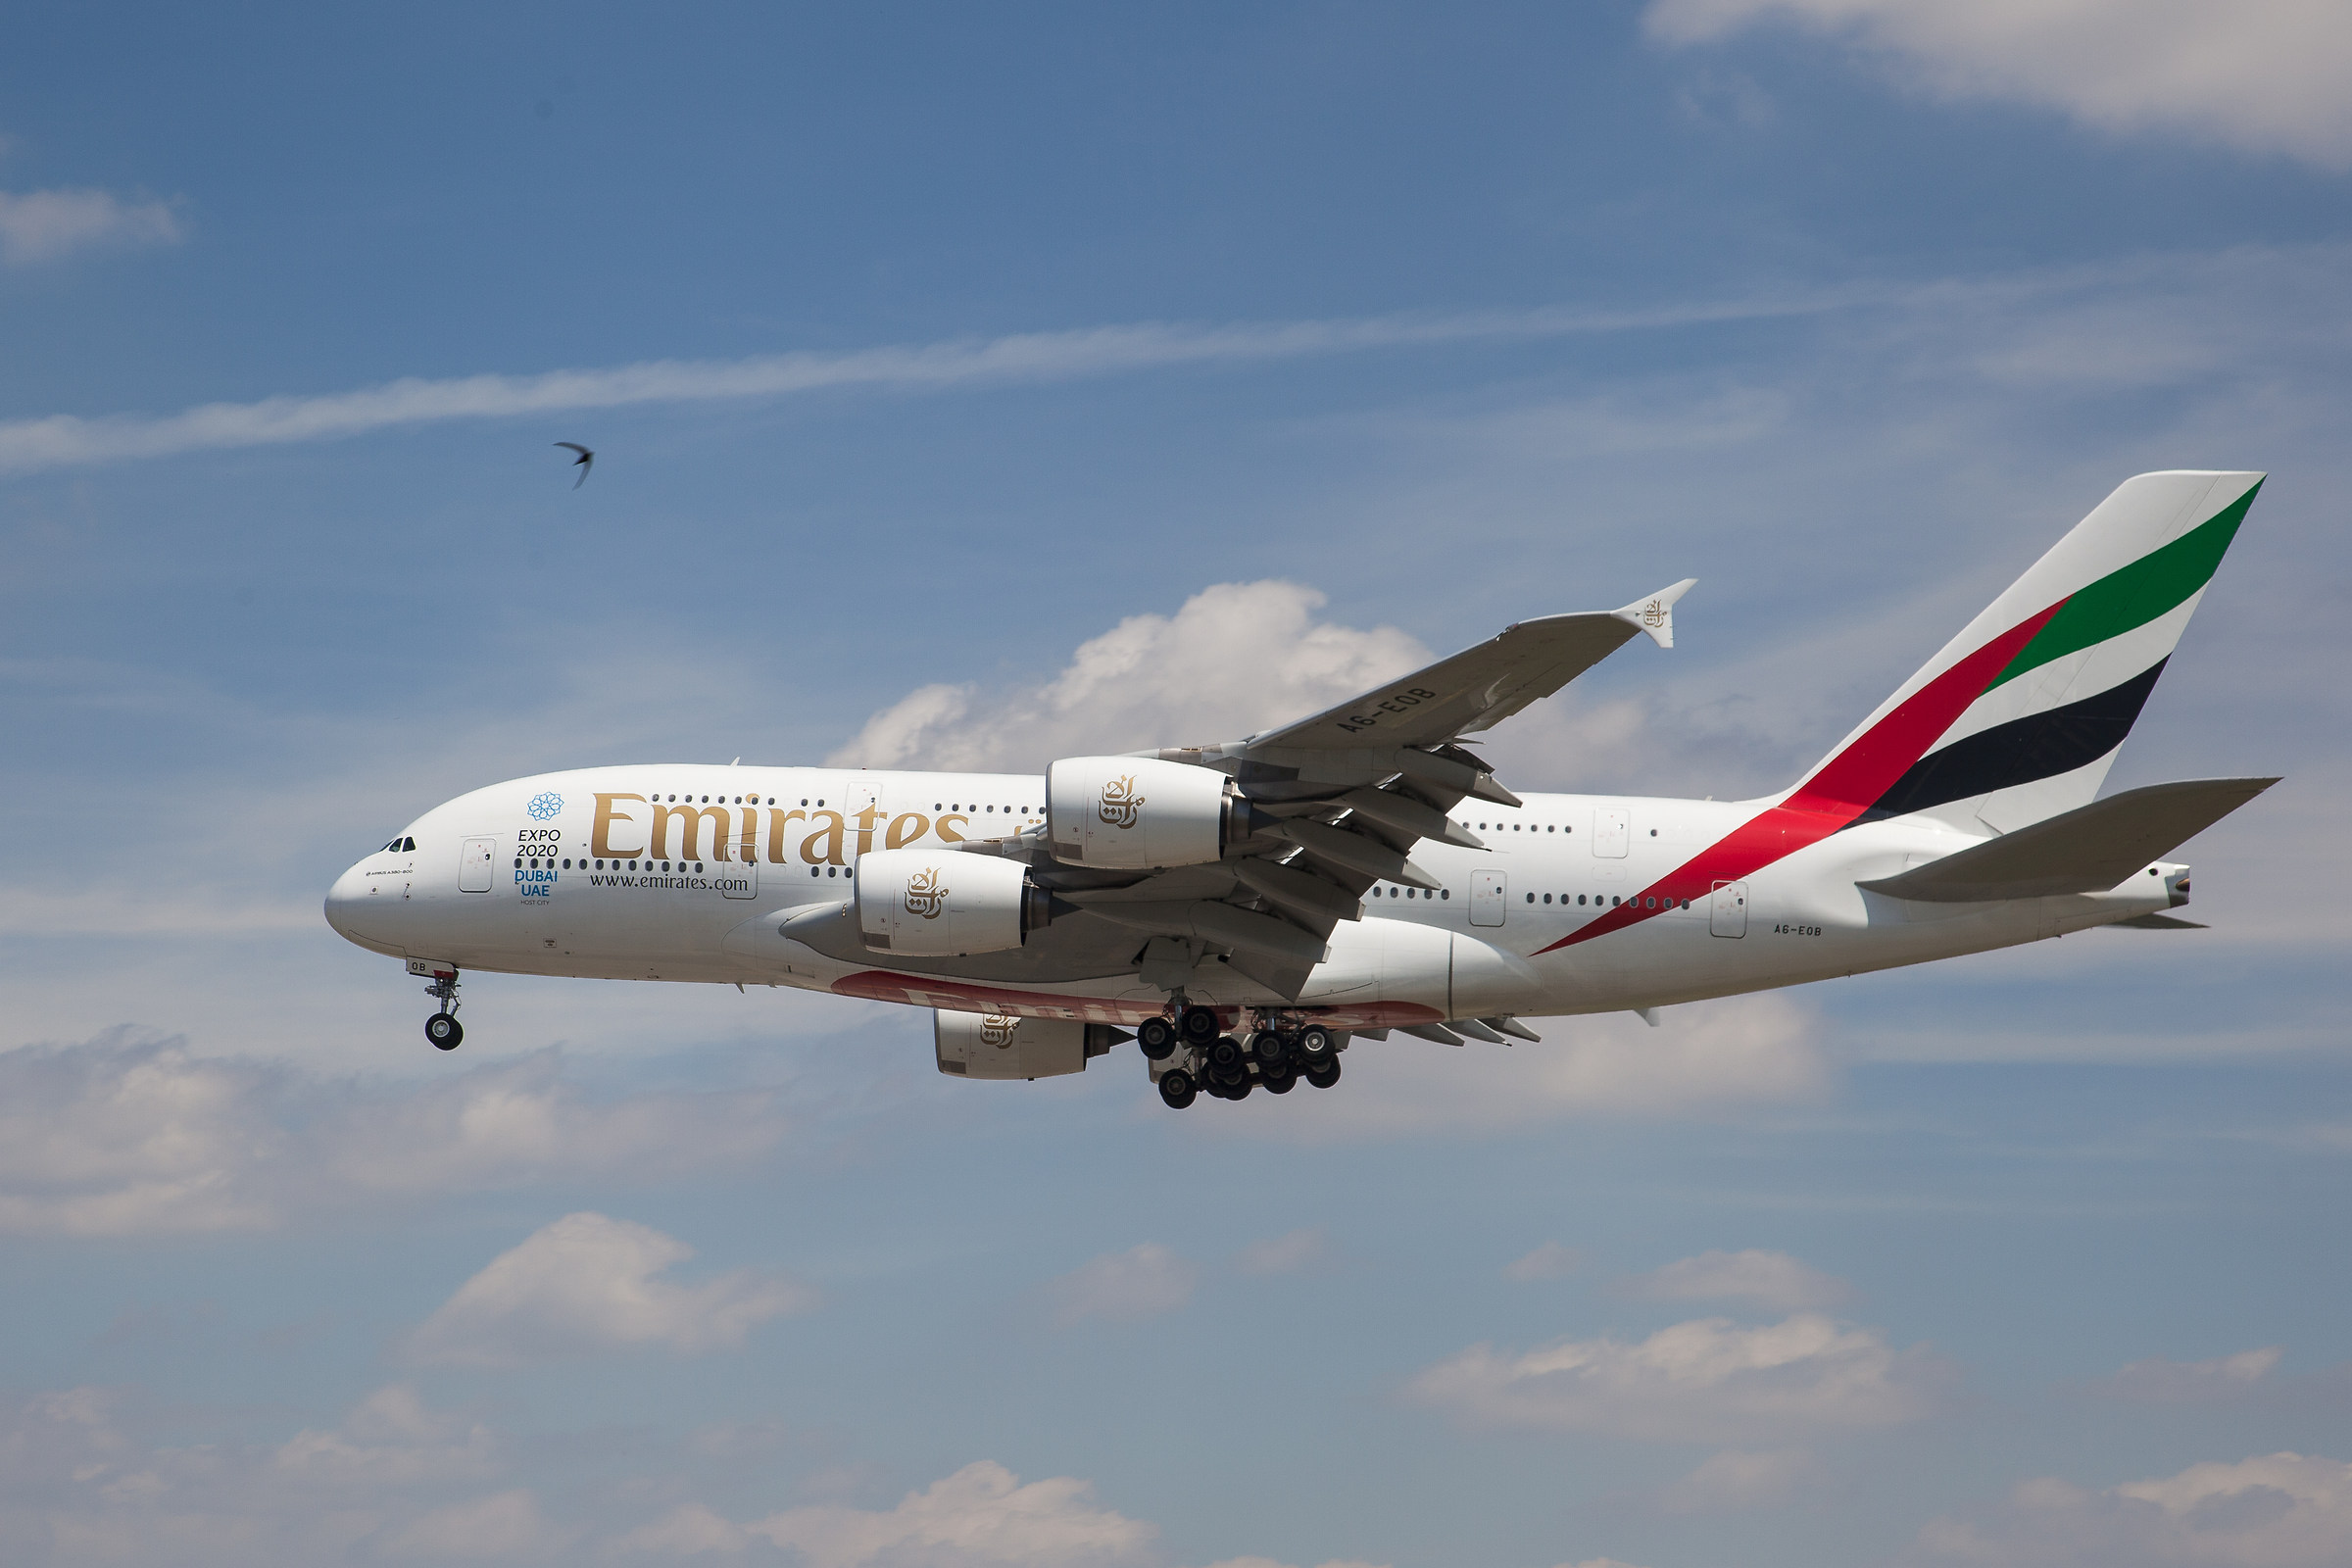 a380-800 Emirates...